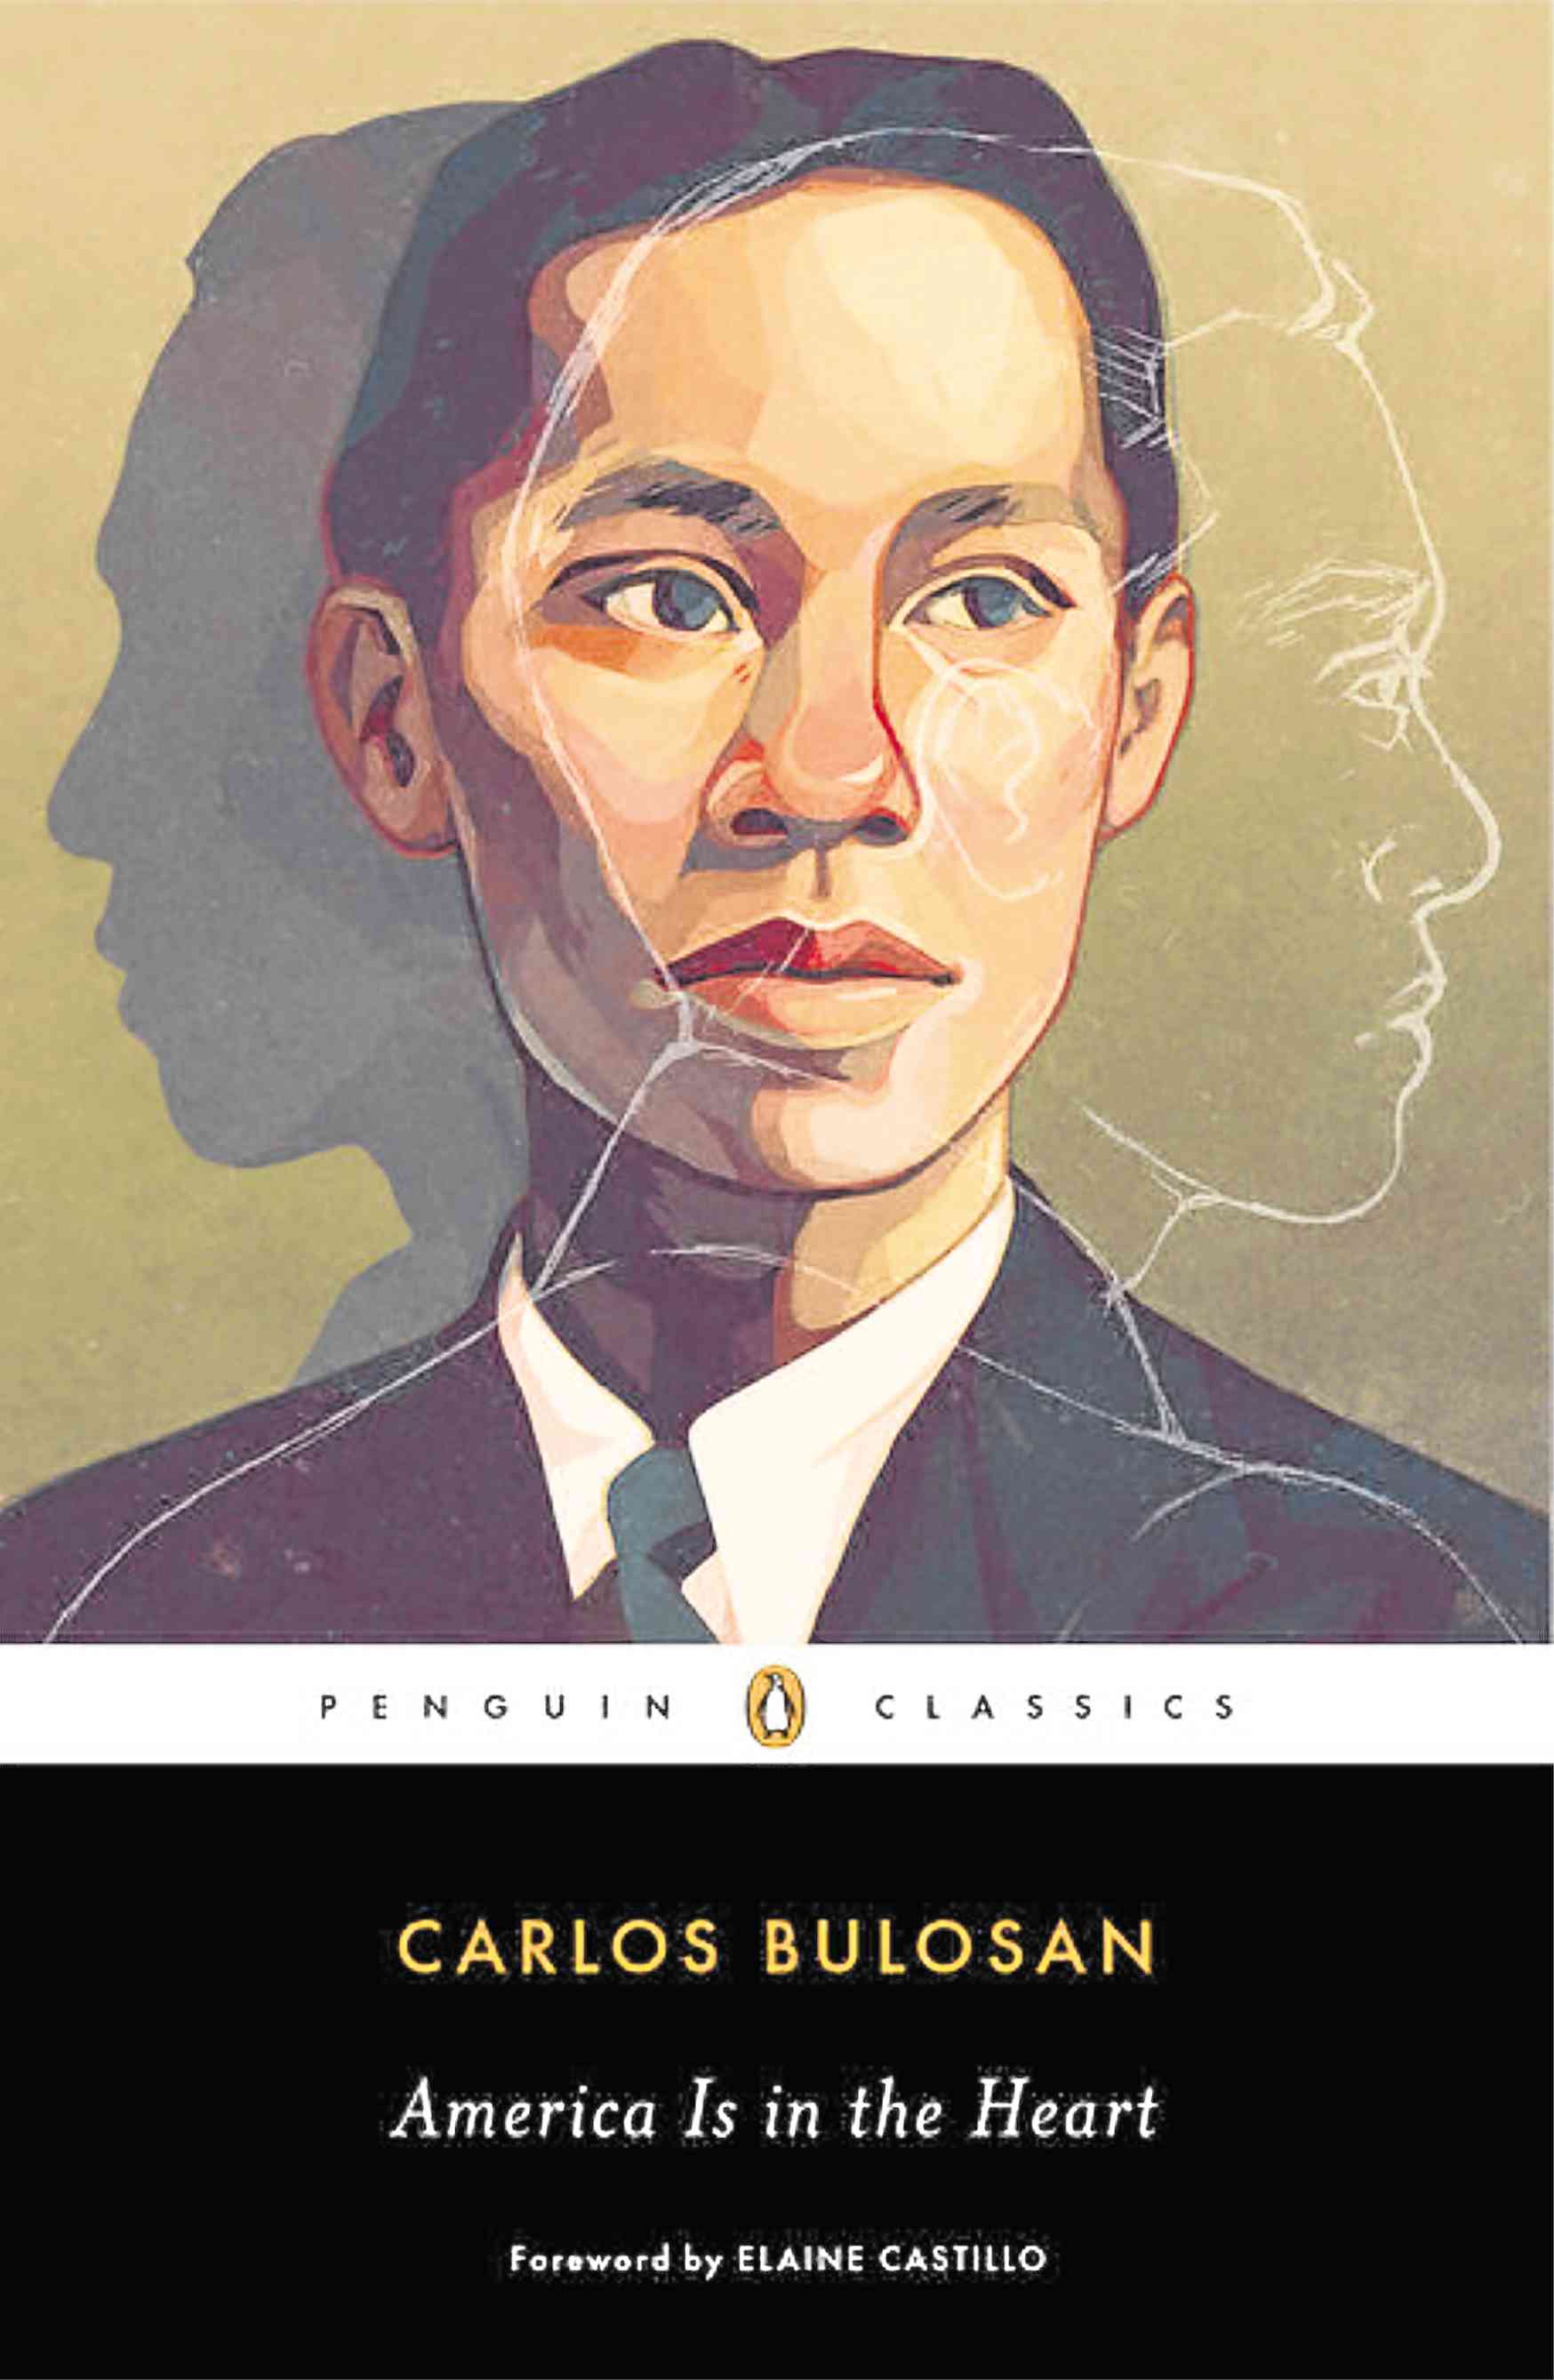 Carlos Bulosan now a Penguin Classics author